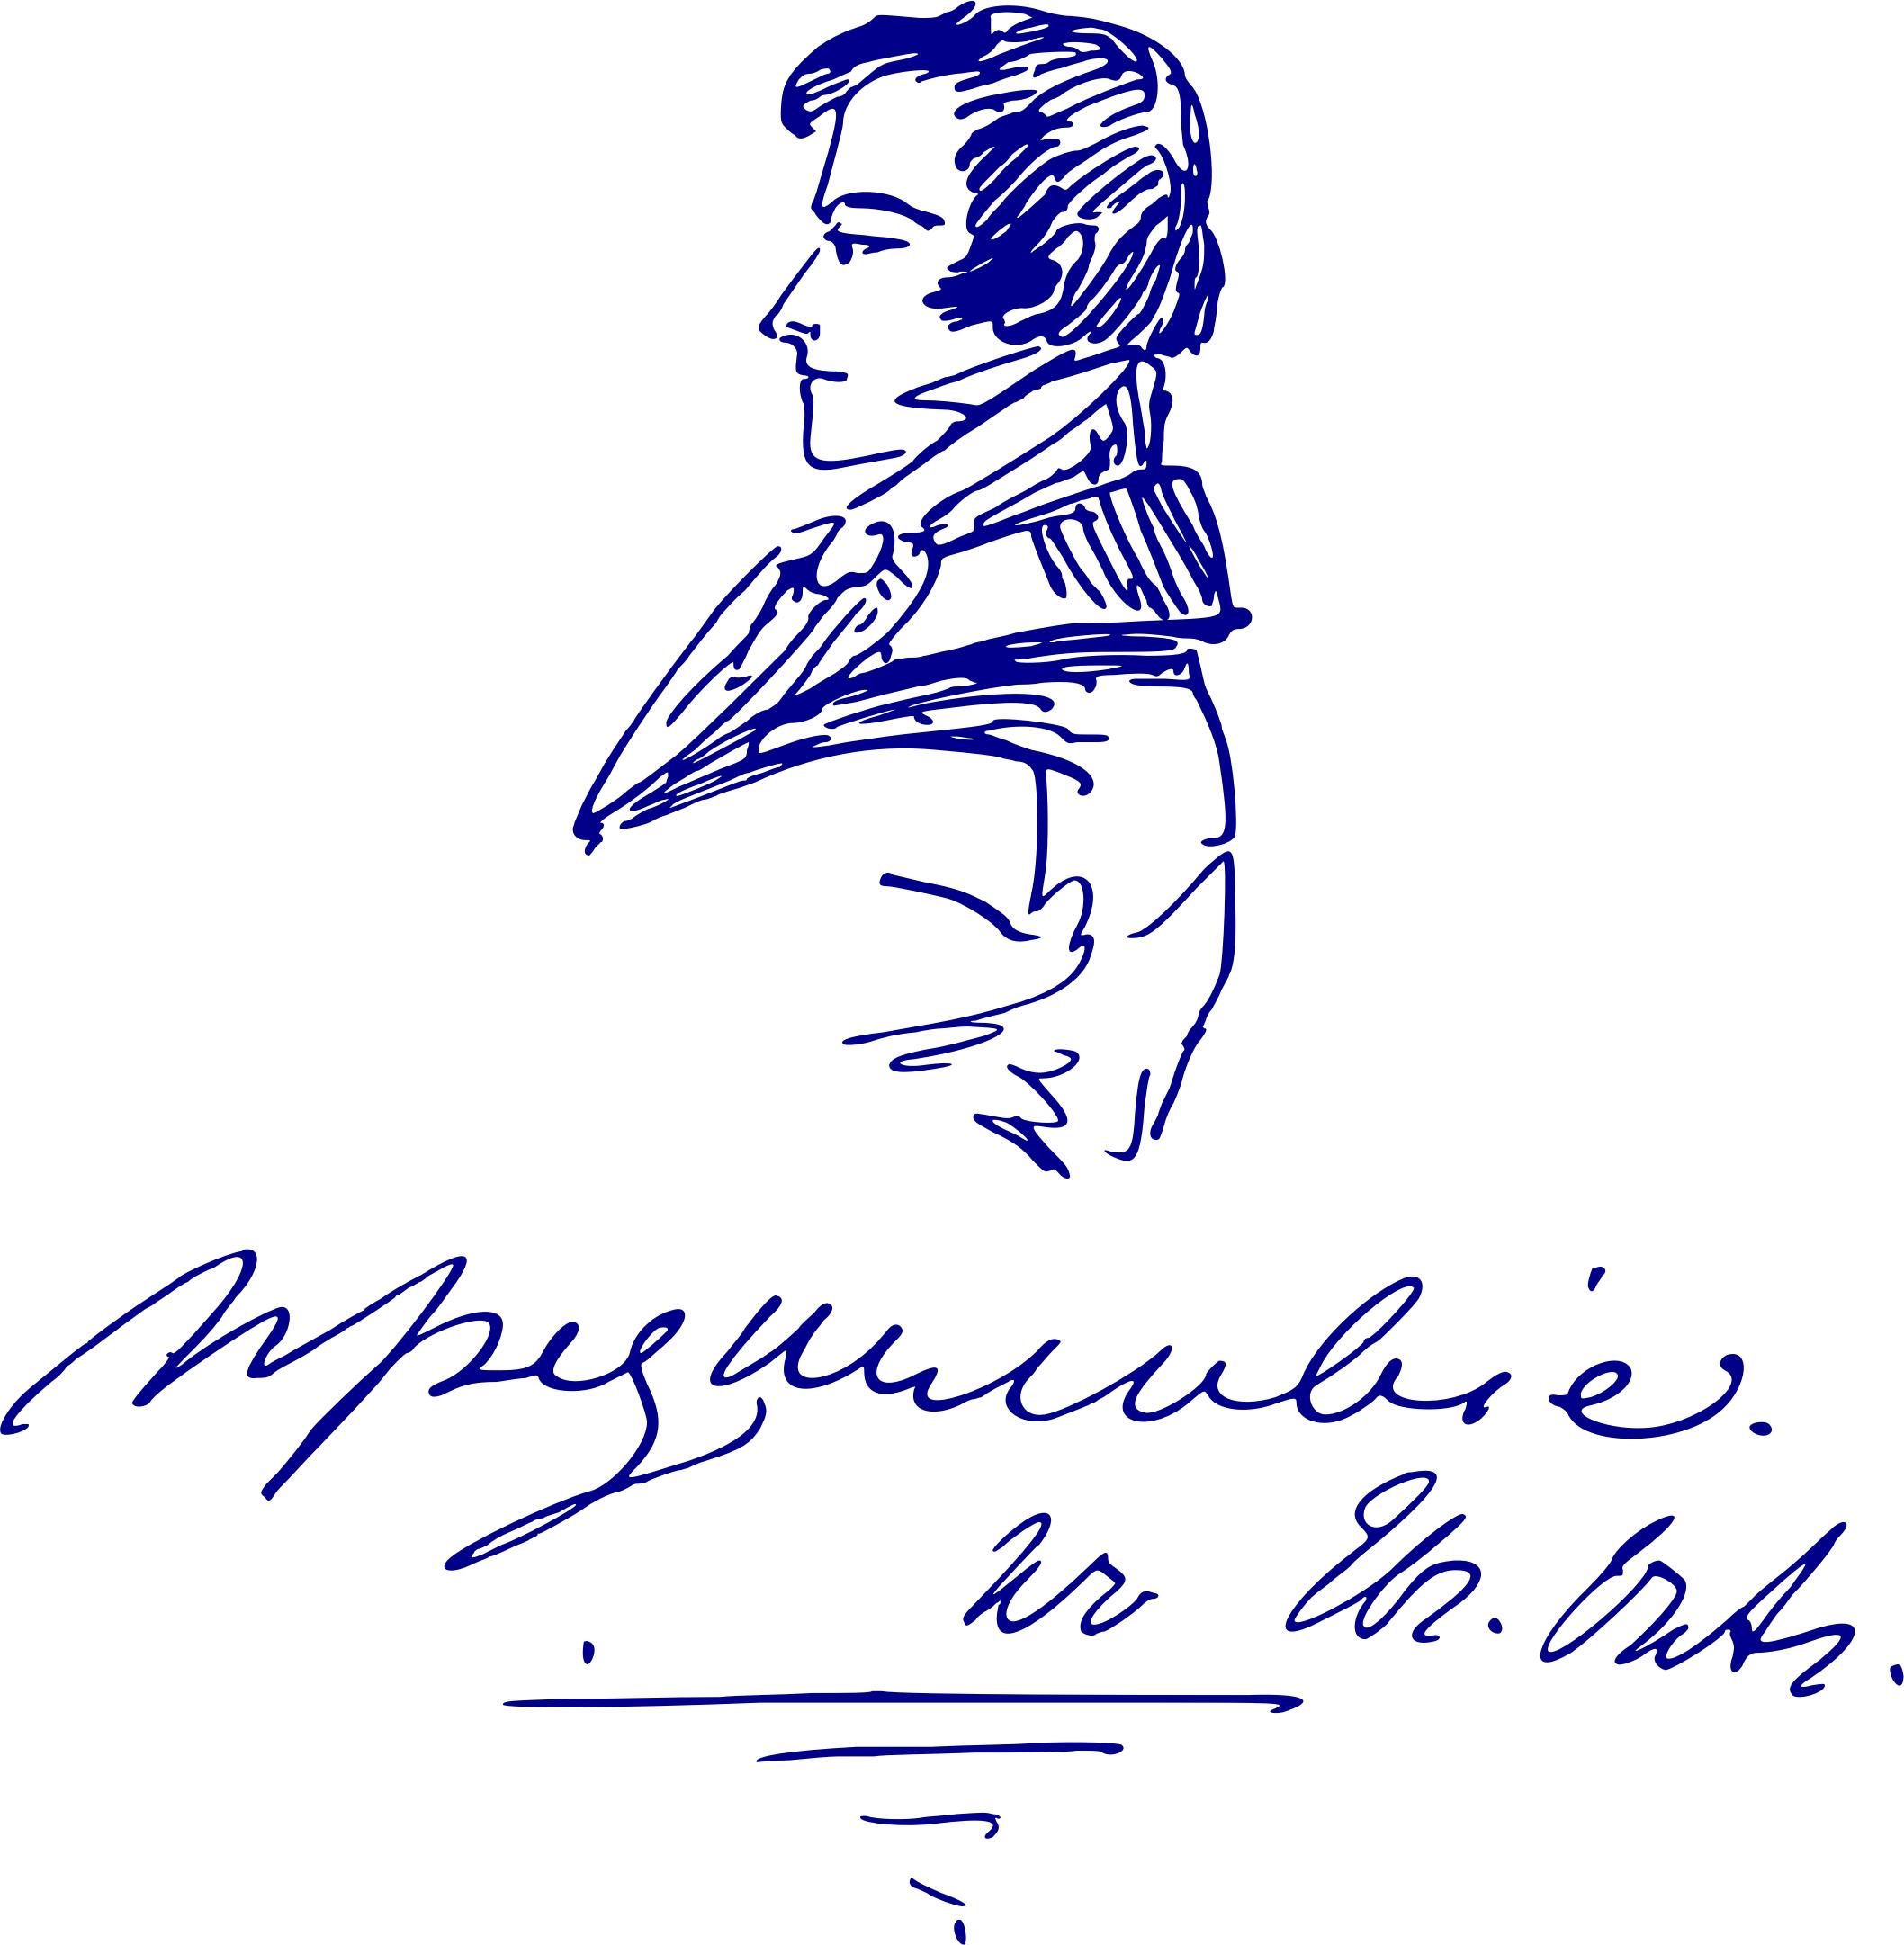 Eugene Onegin s portrait by Alexander Pushkin png